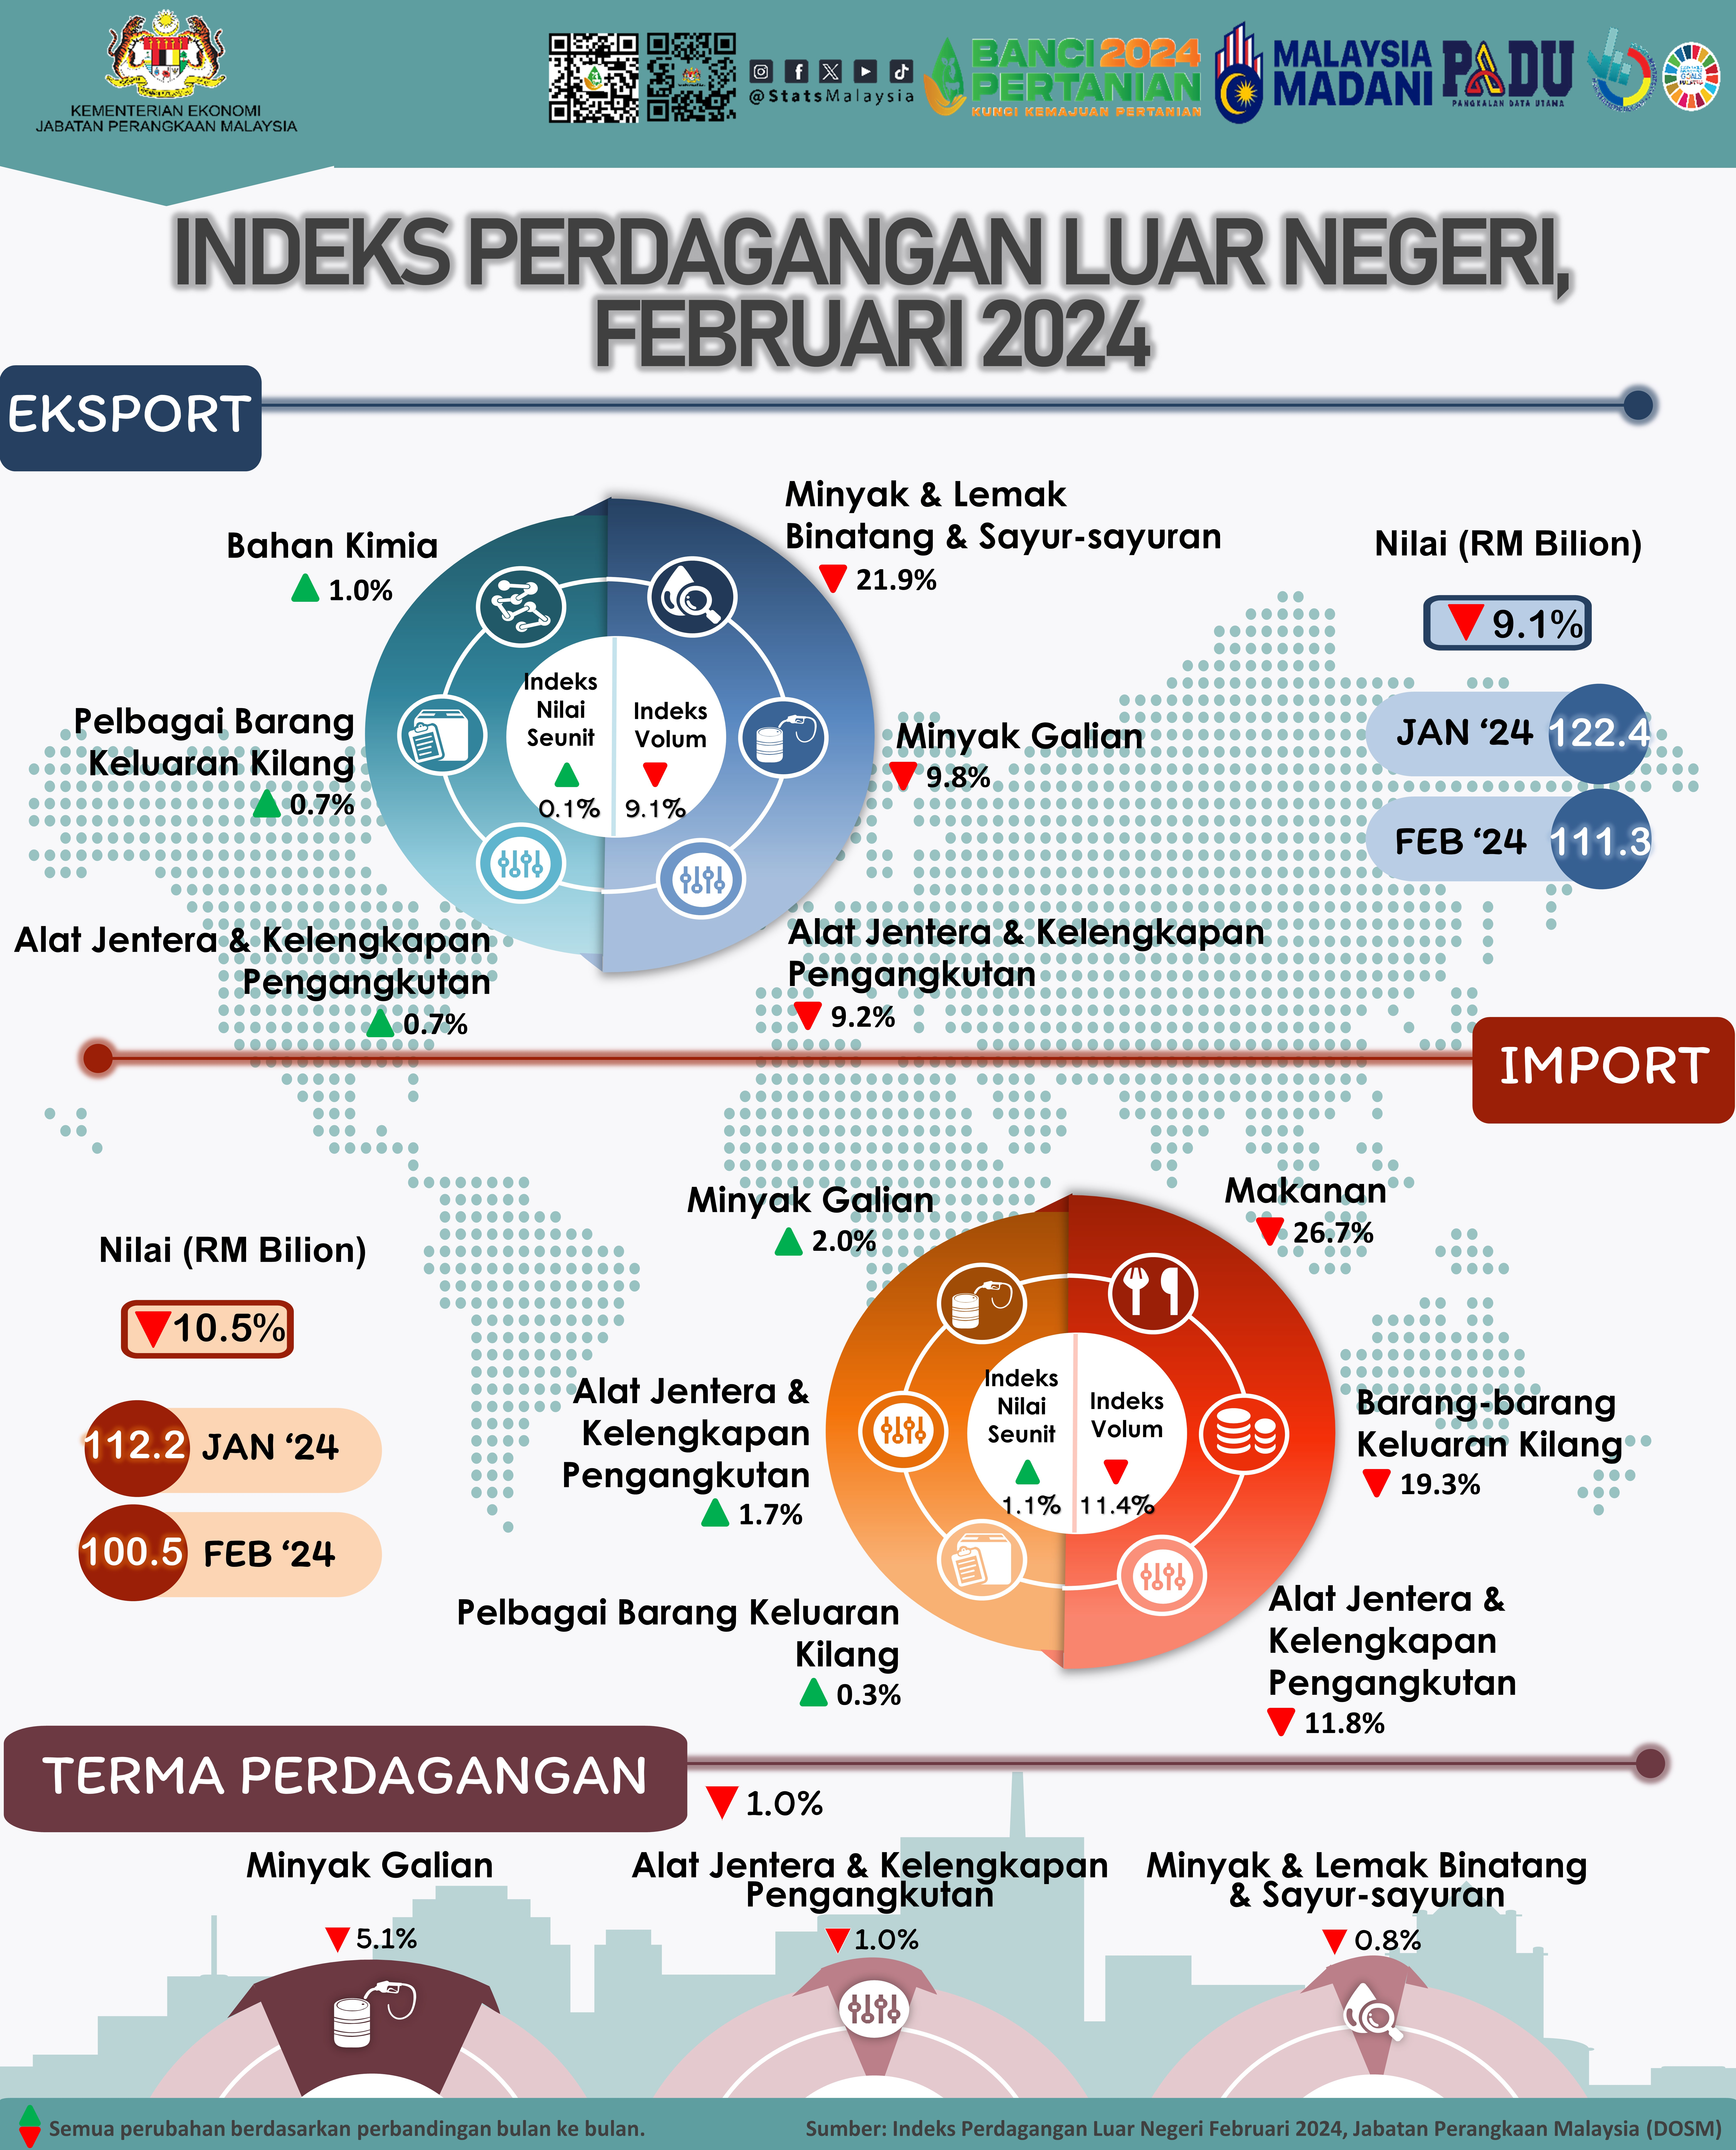 Harga eksport dan import Malaysia kembali positif